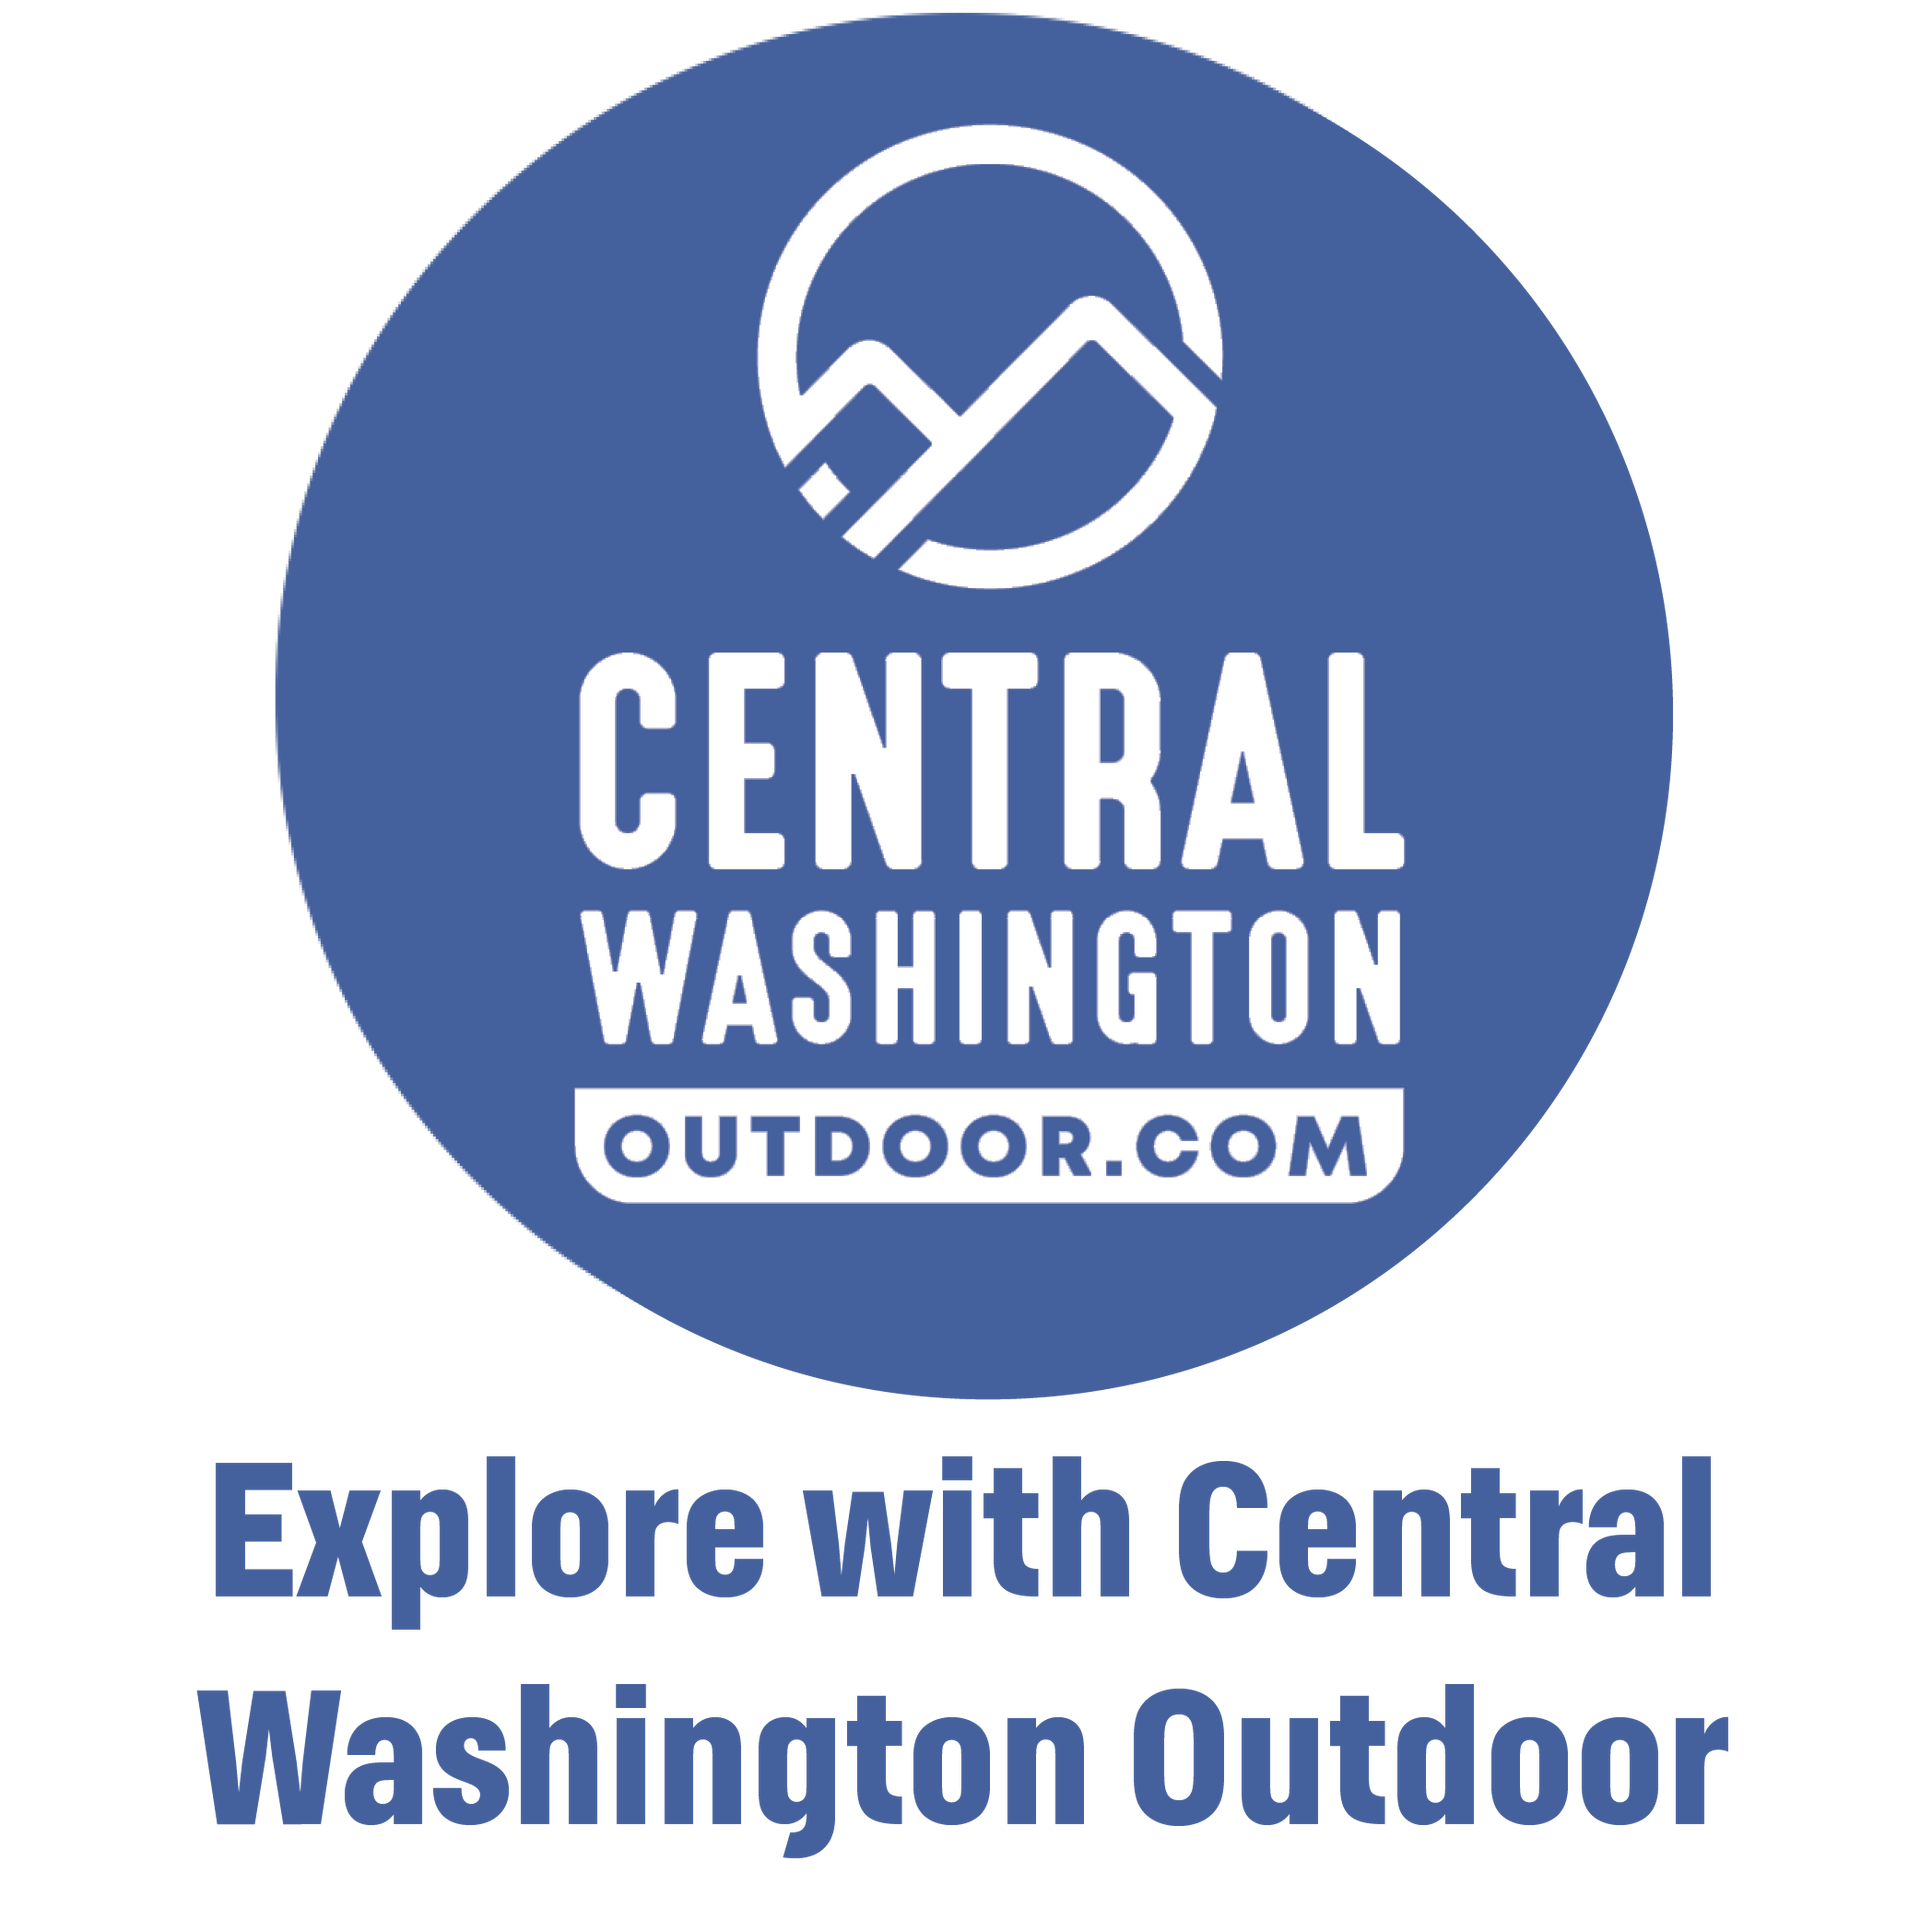 Explore with Central Washington Outdoor